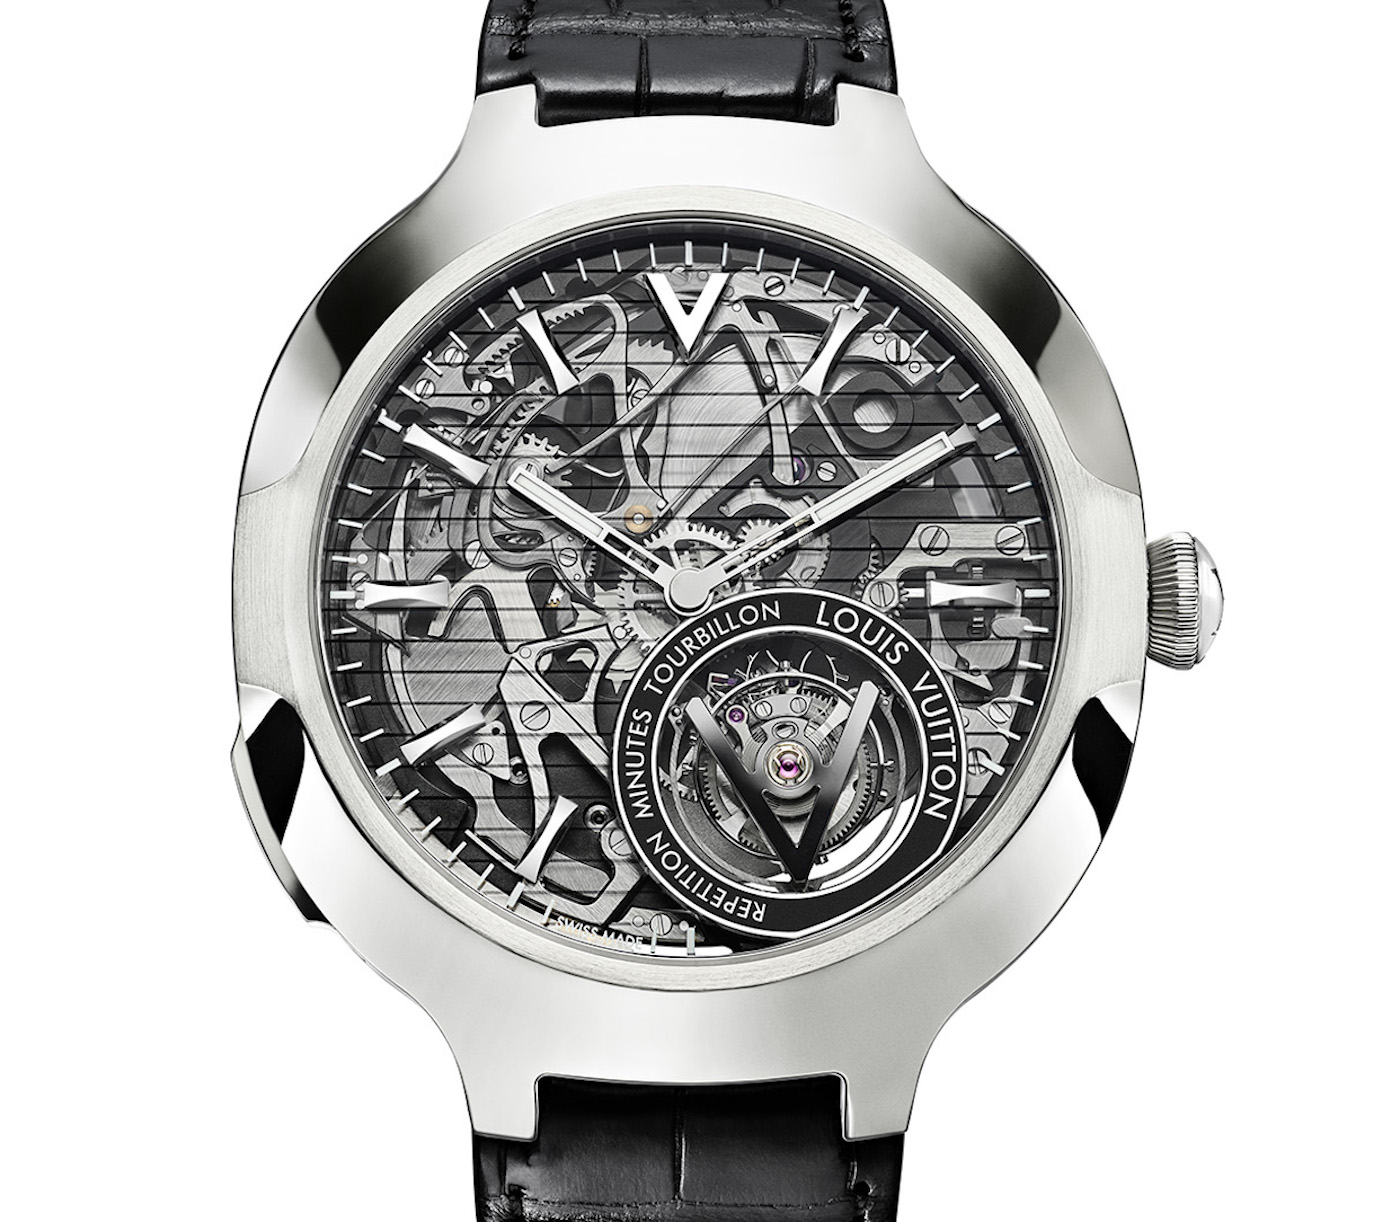 Louis Vuitton Escale Spin Time Tourbillon Central Blue Watch Hands-On